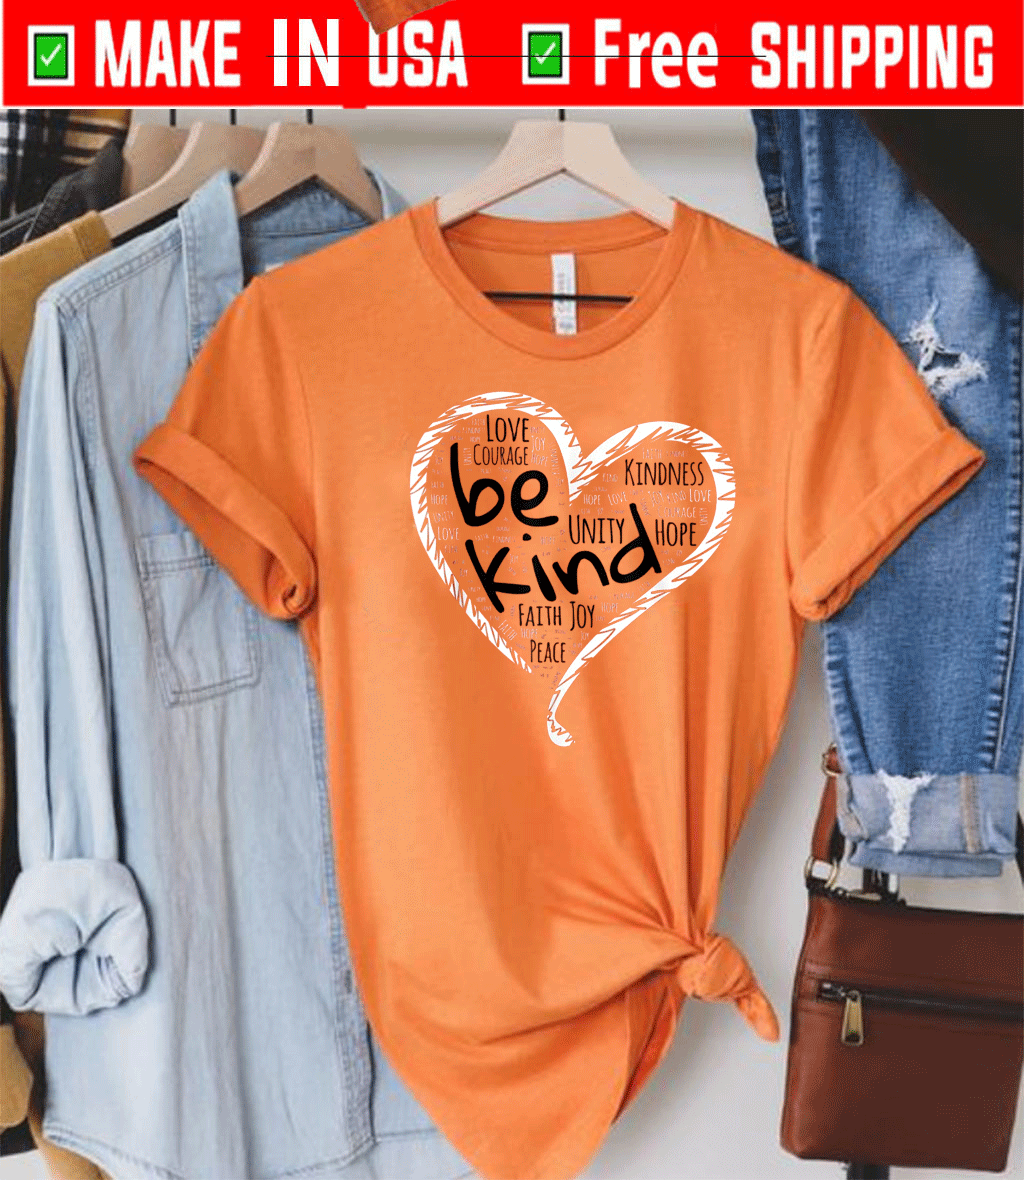 orange t shirt for anti bullying